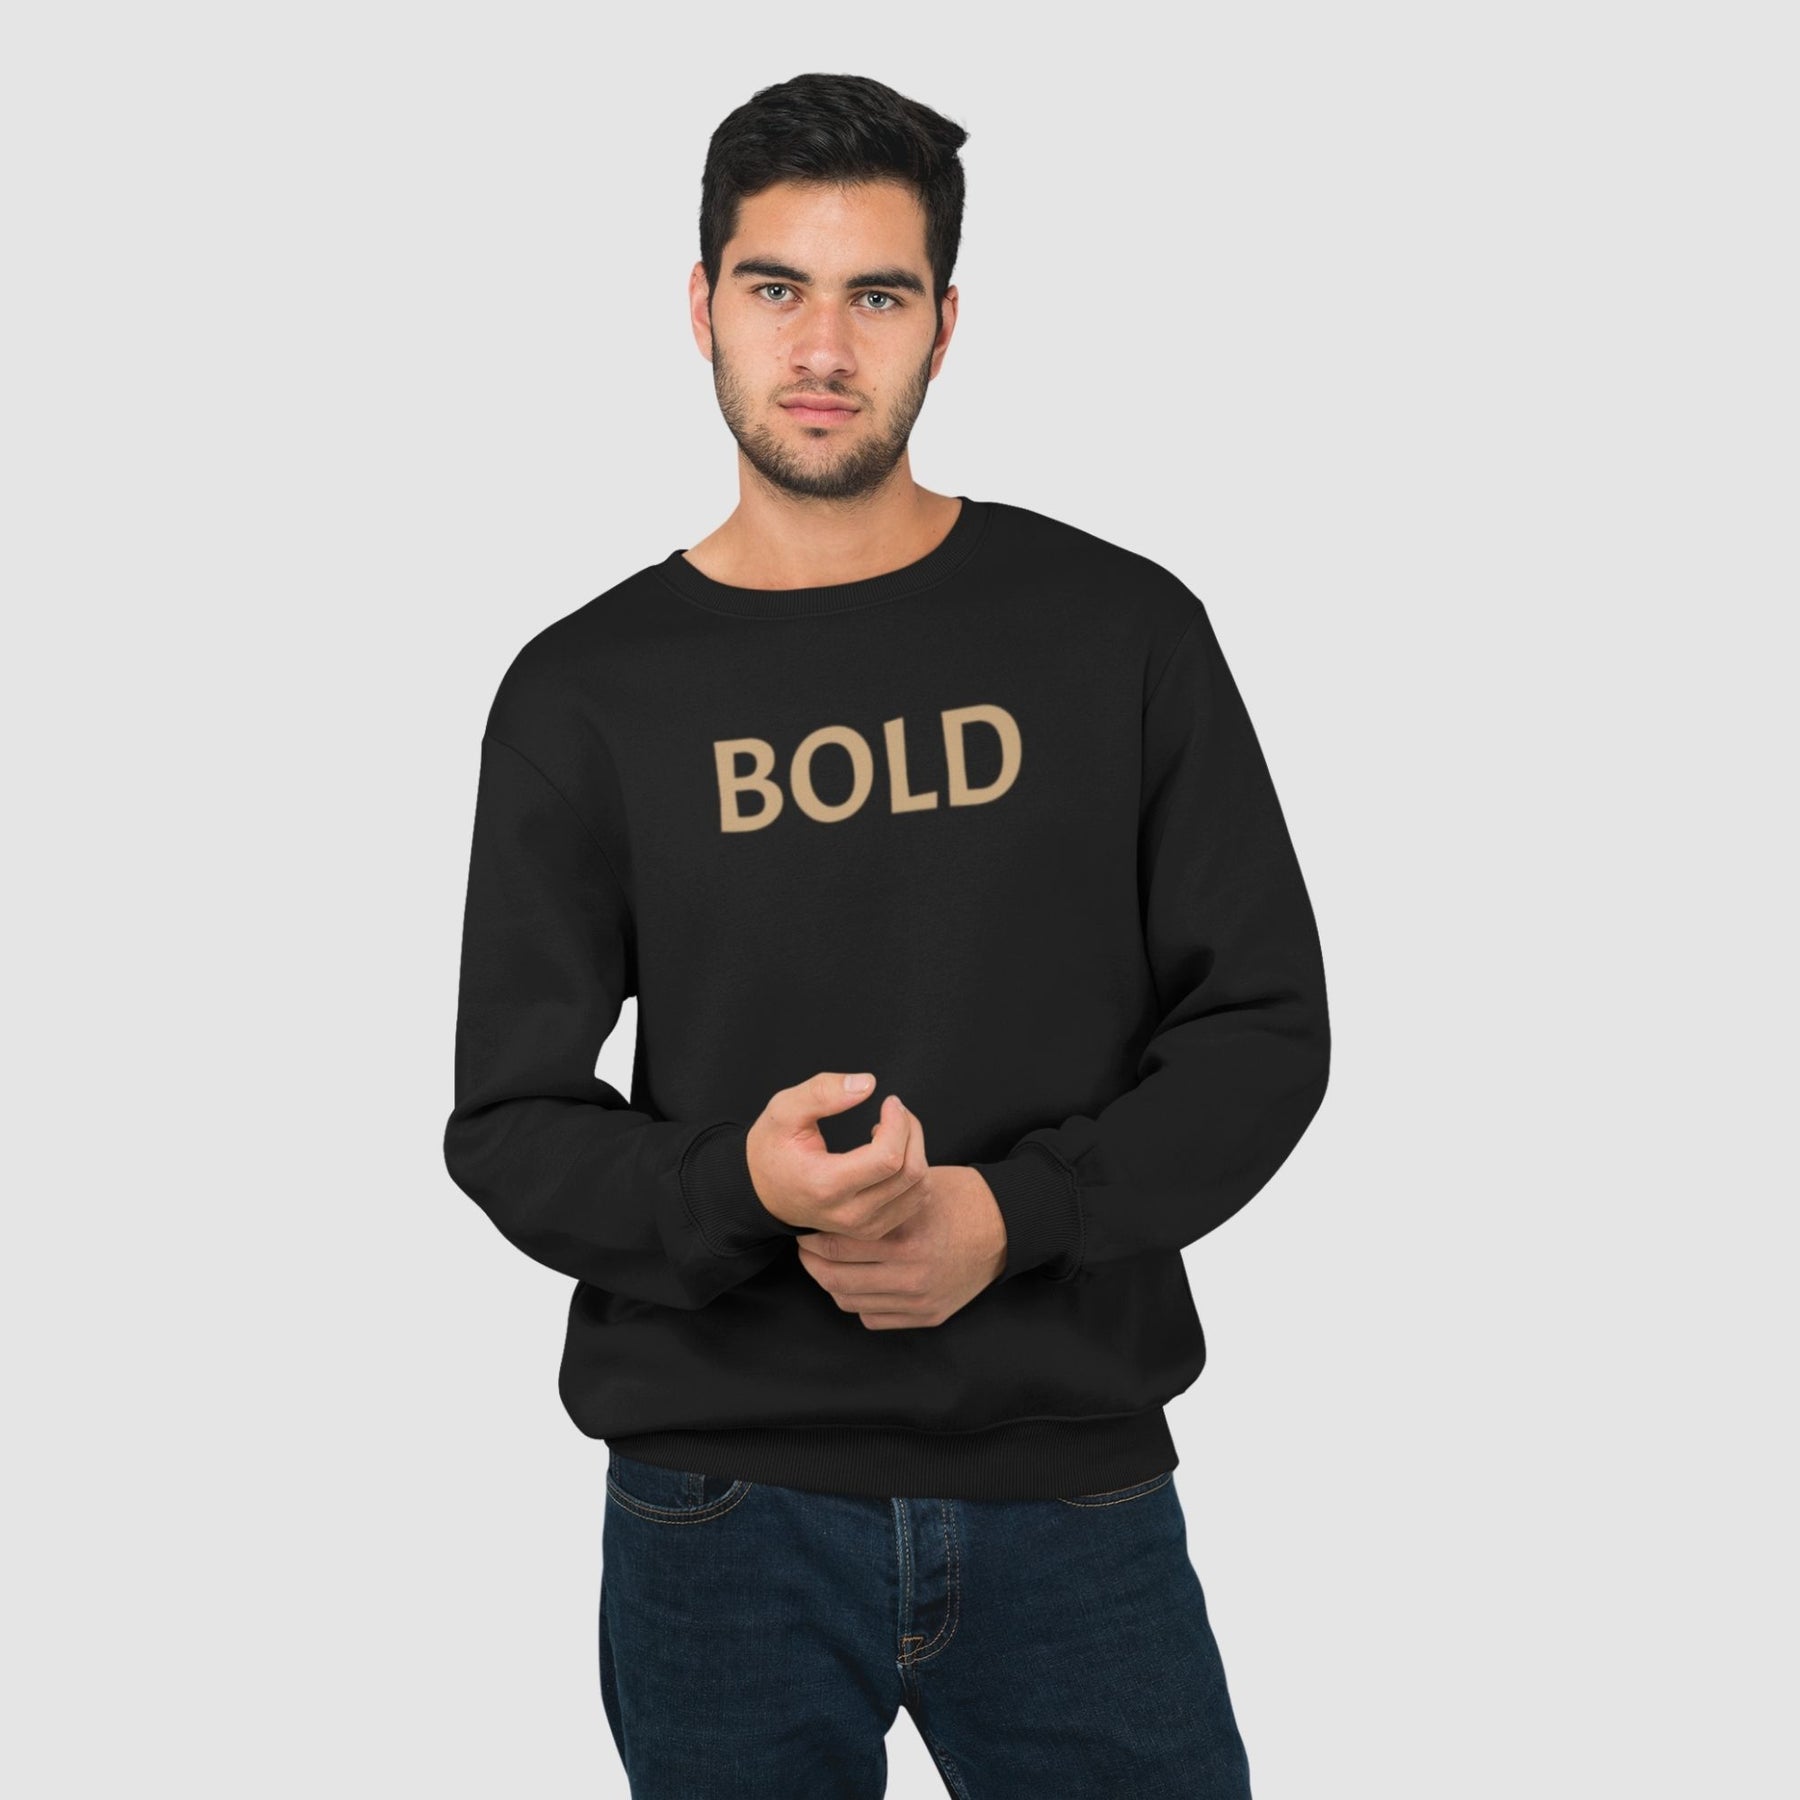 bold-cotton-printed-unisex-black-men-model-sweatshirt-gogirgit-com